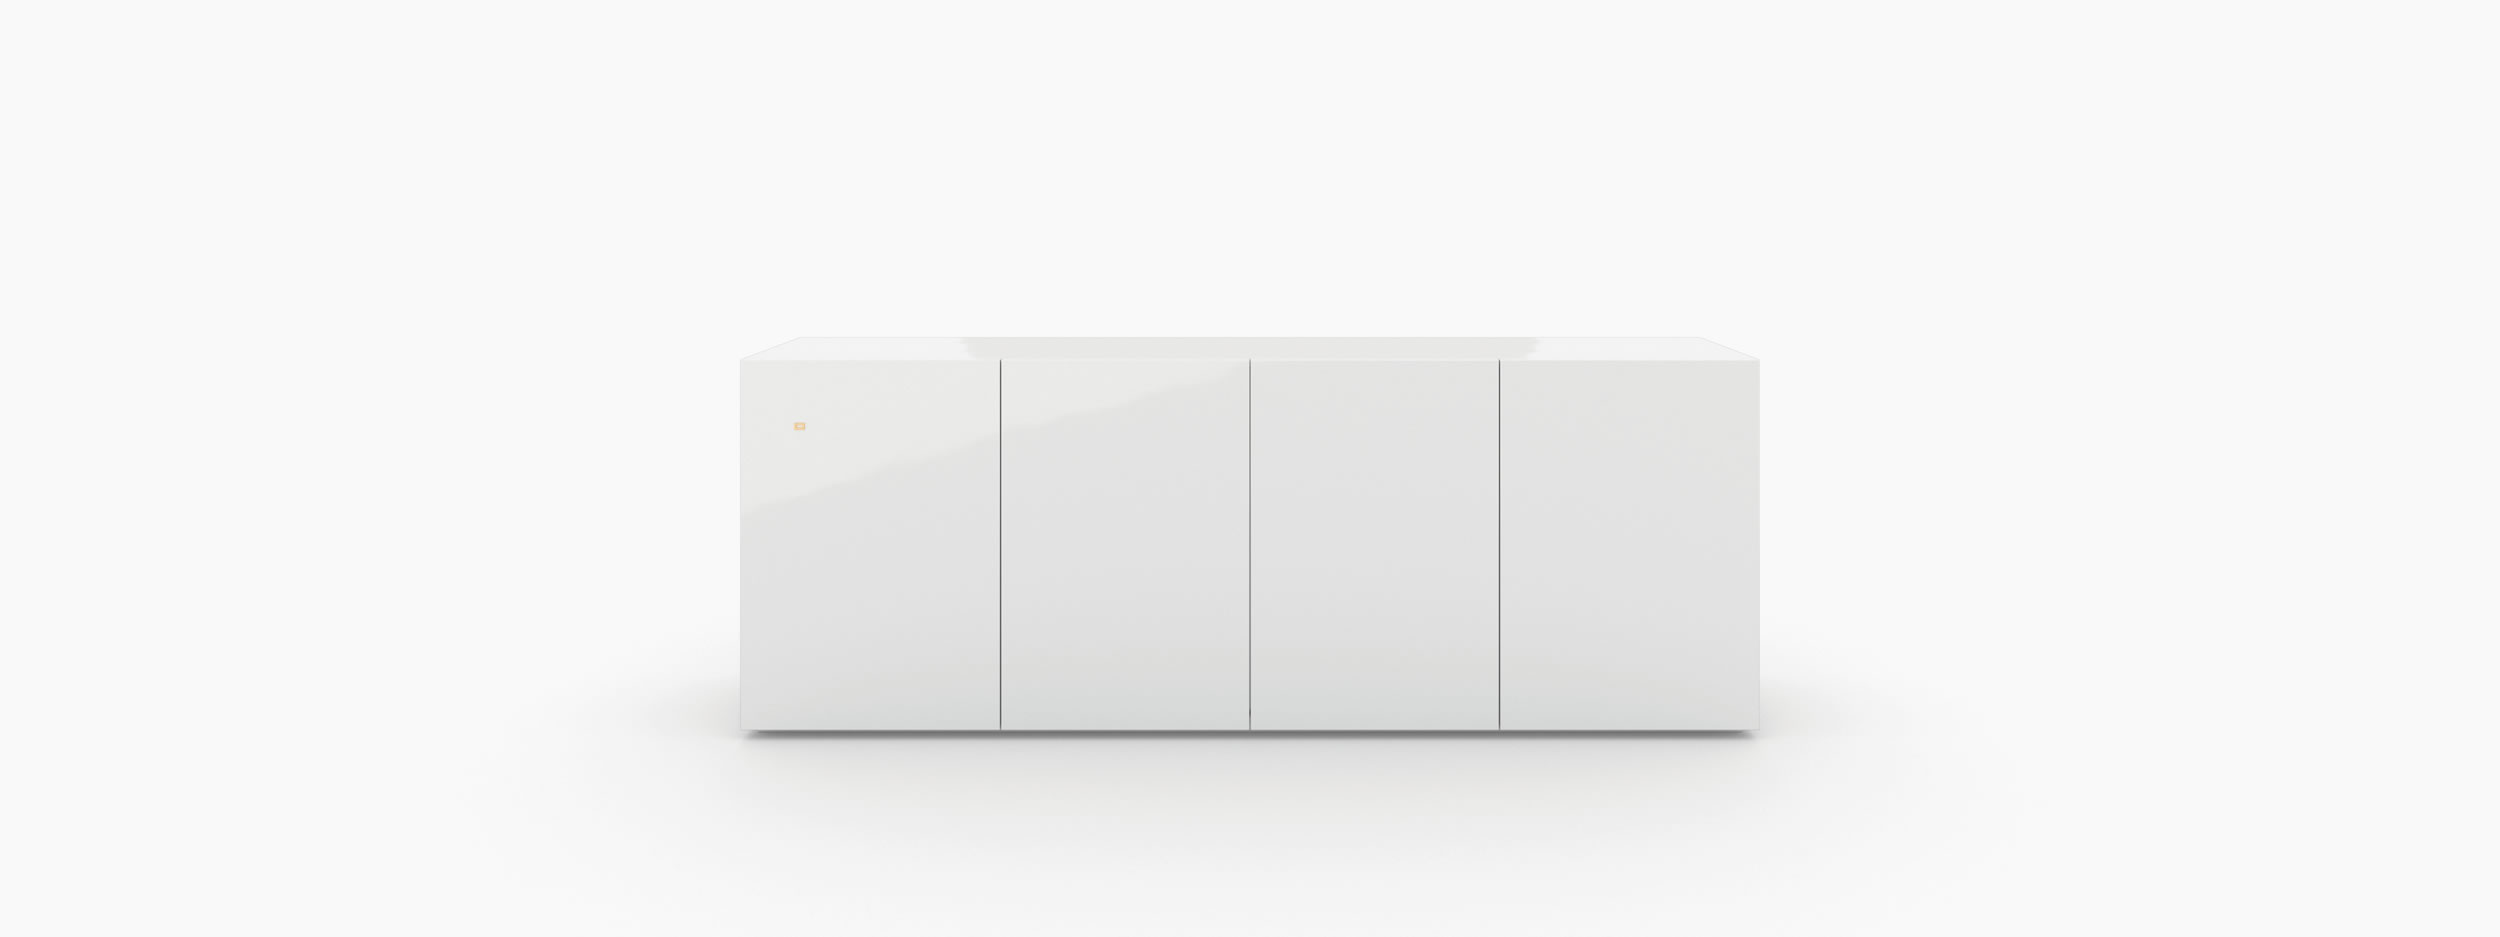 Sideboard quader weiss archidaily Buero minimalist Sideboards FS 63 FELIX SCHWAKE RECHTECK